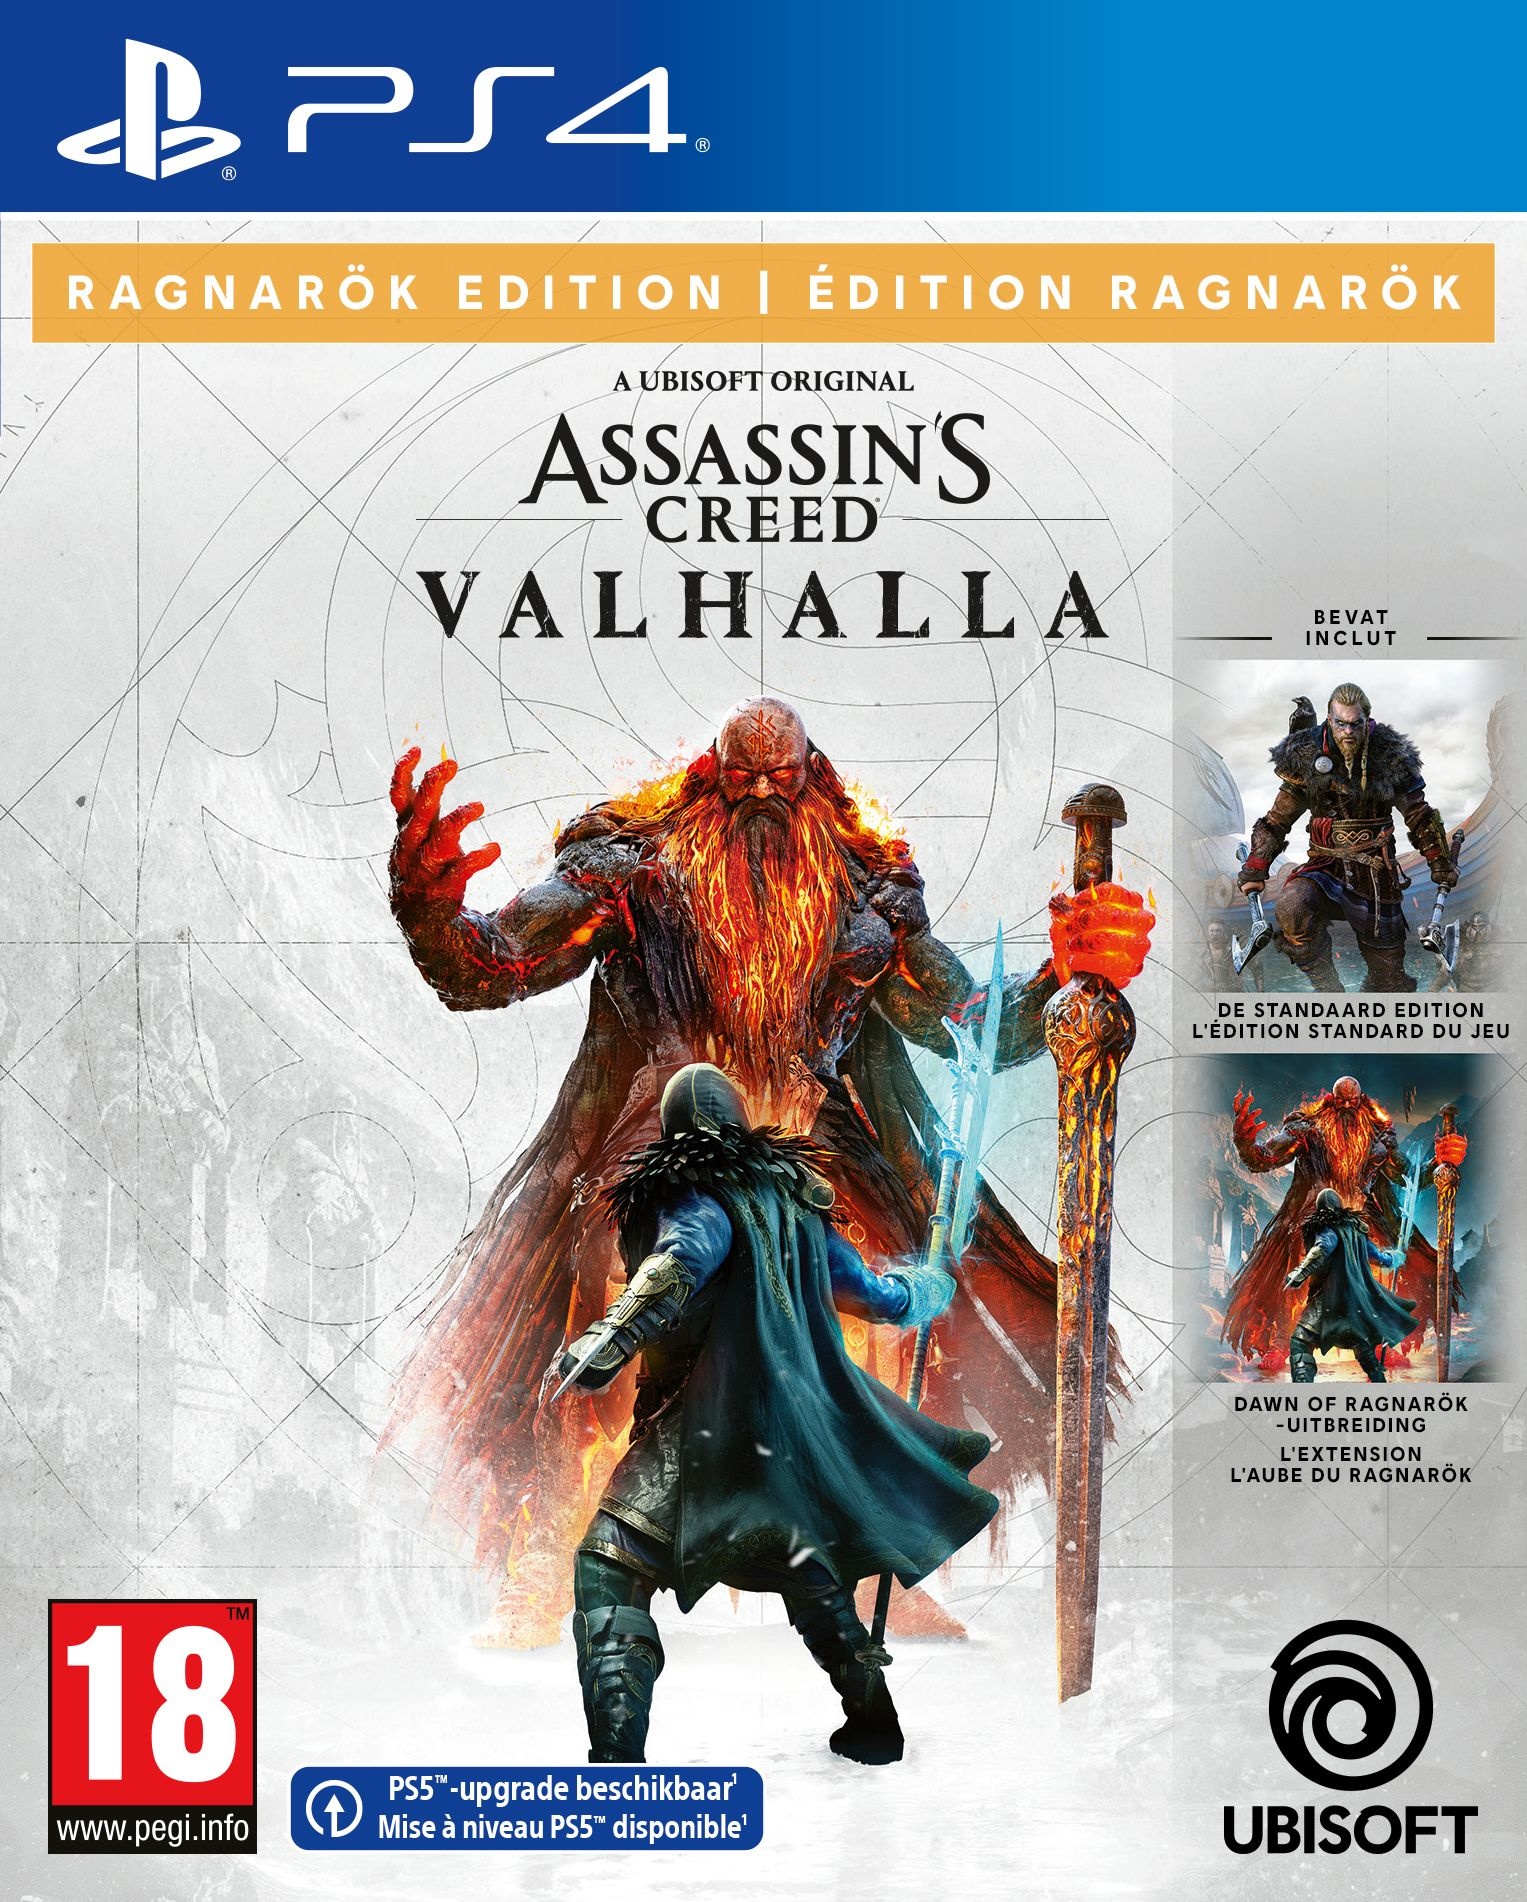 repetitie Reisbureau kom Assassin's Creed Valhalla: Ragnarök Edition kopen | PS4 - GameResource